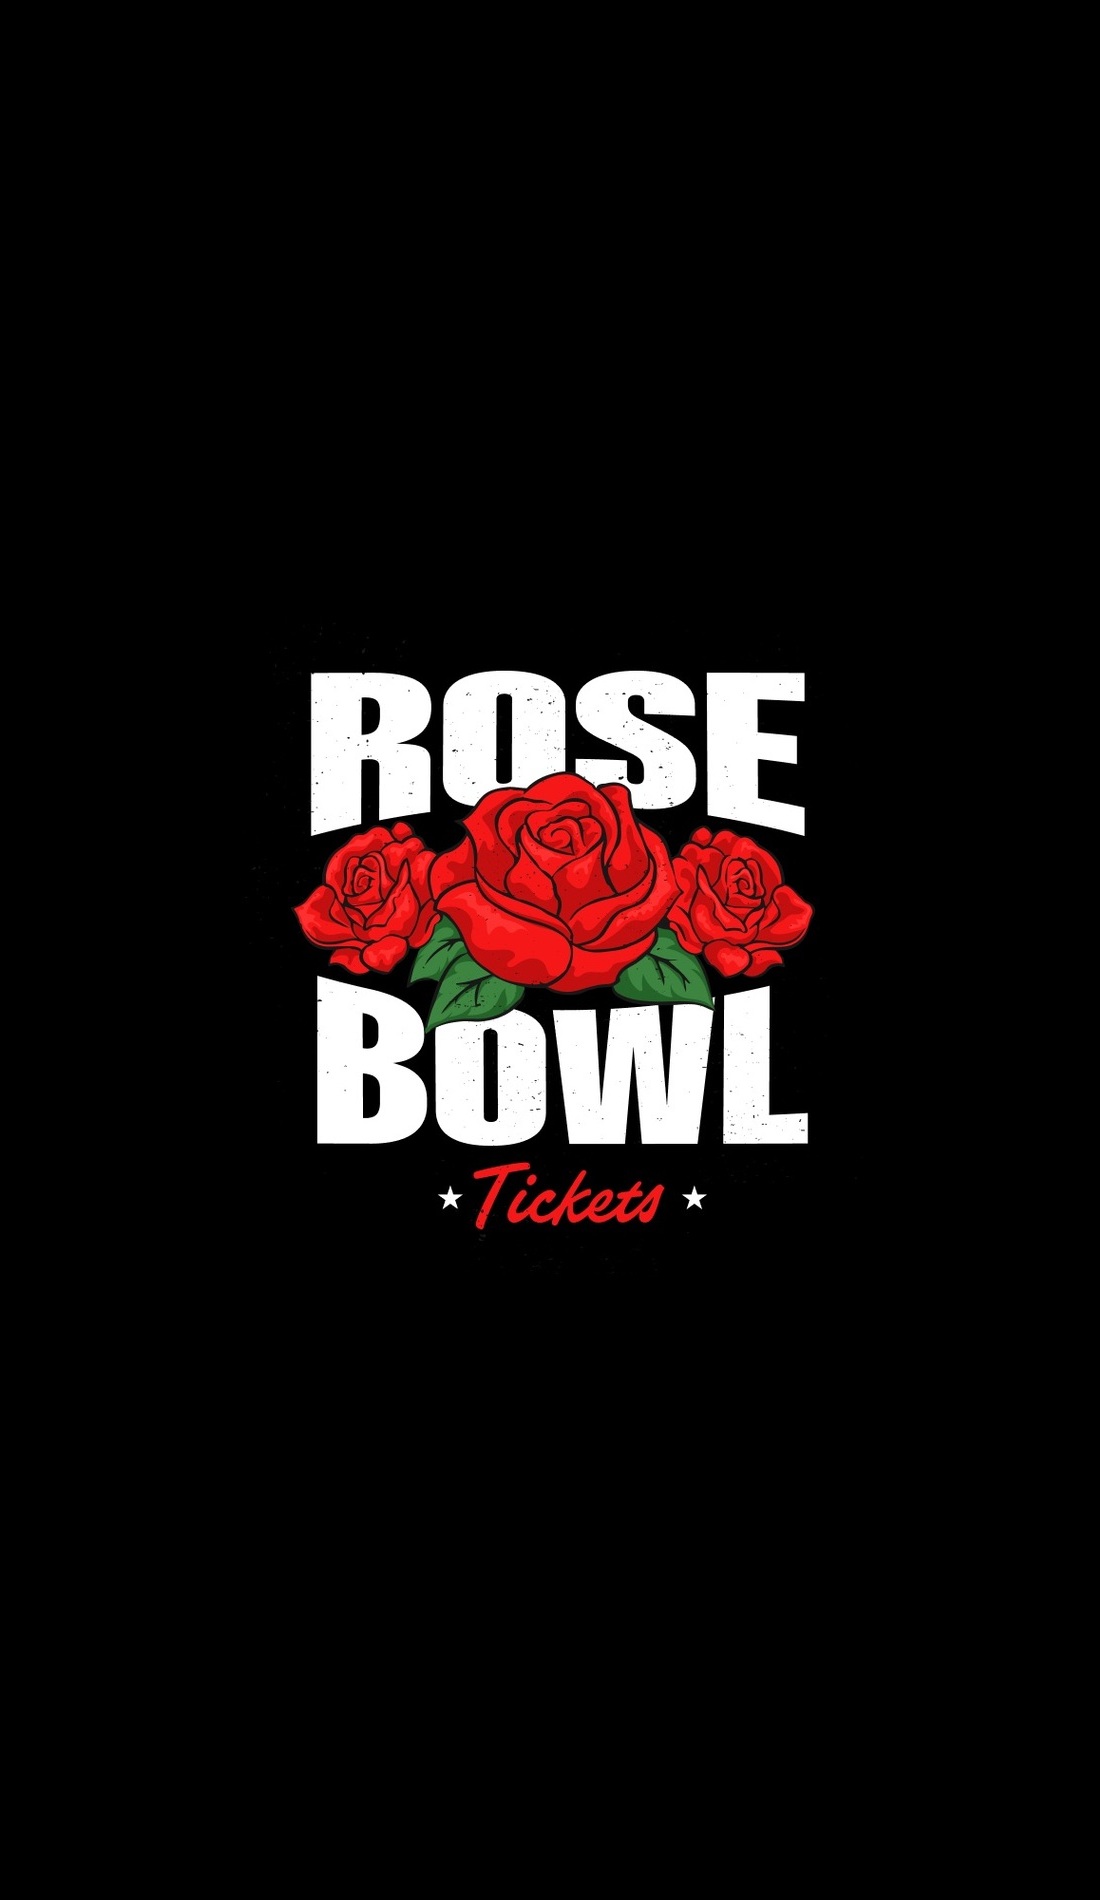 A Rose Bowl Game live event